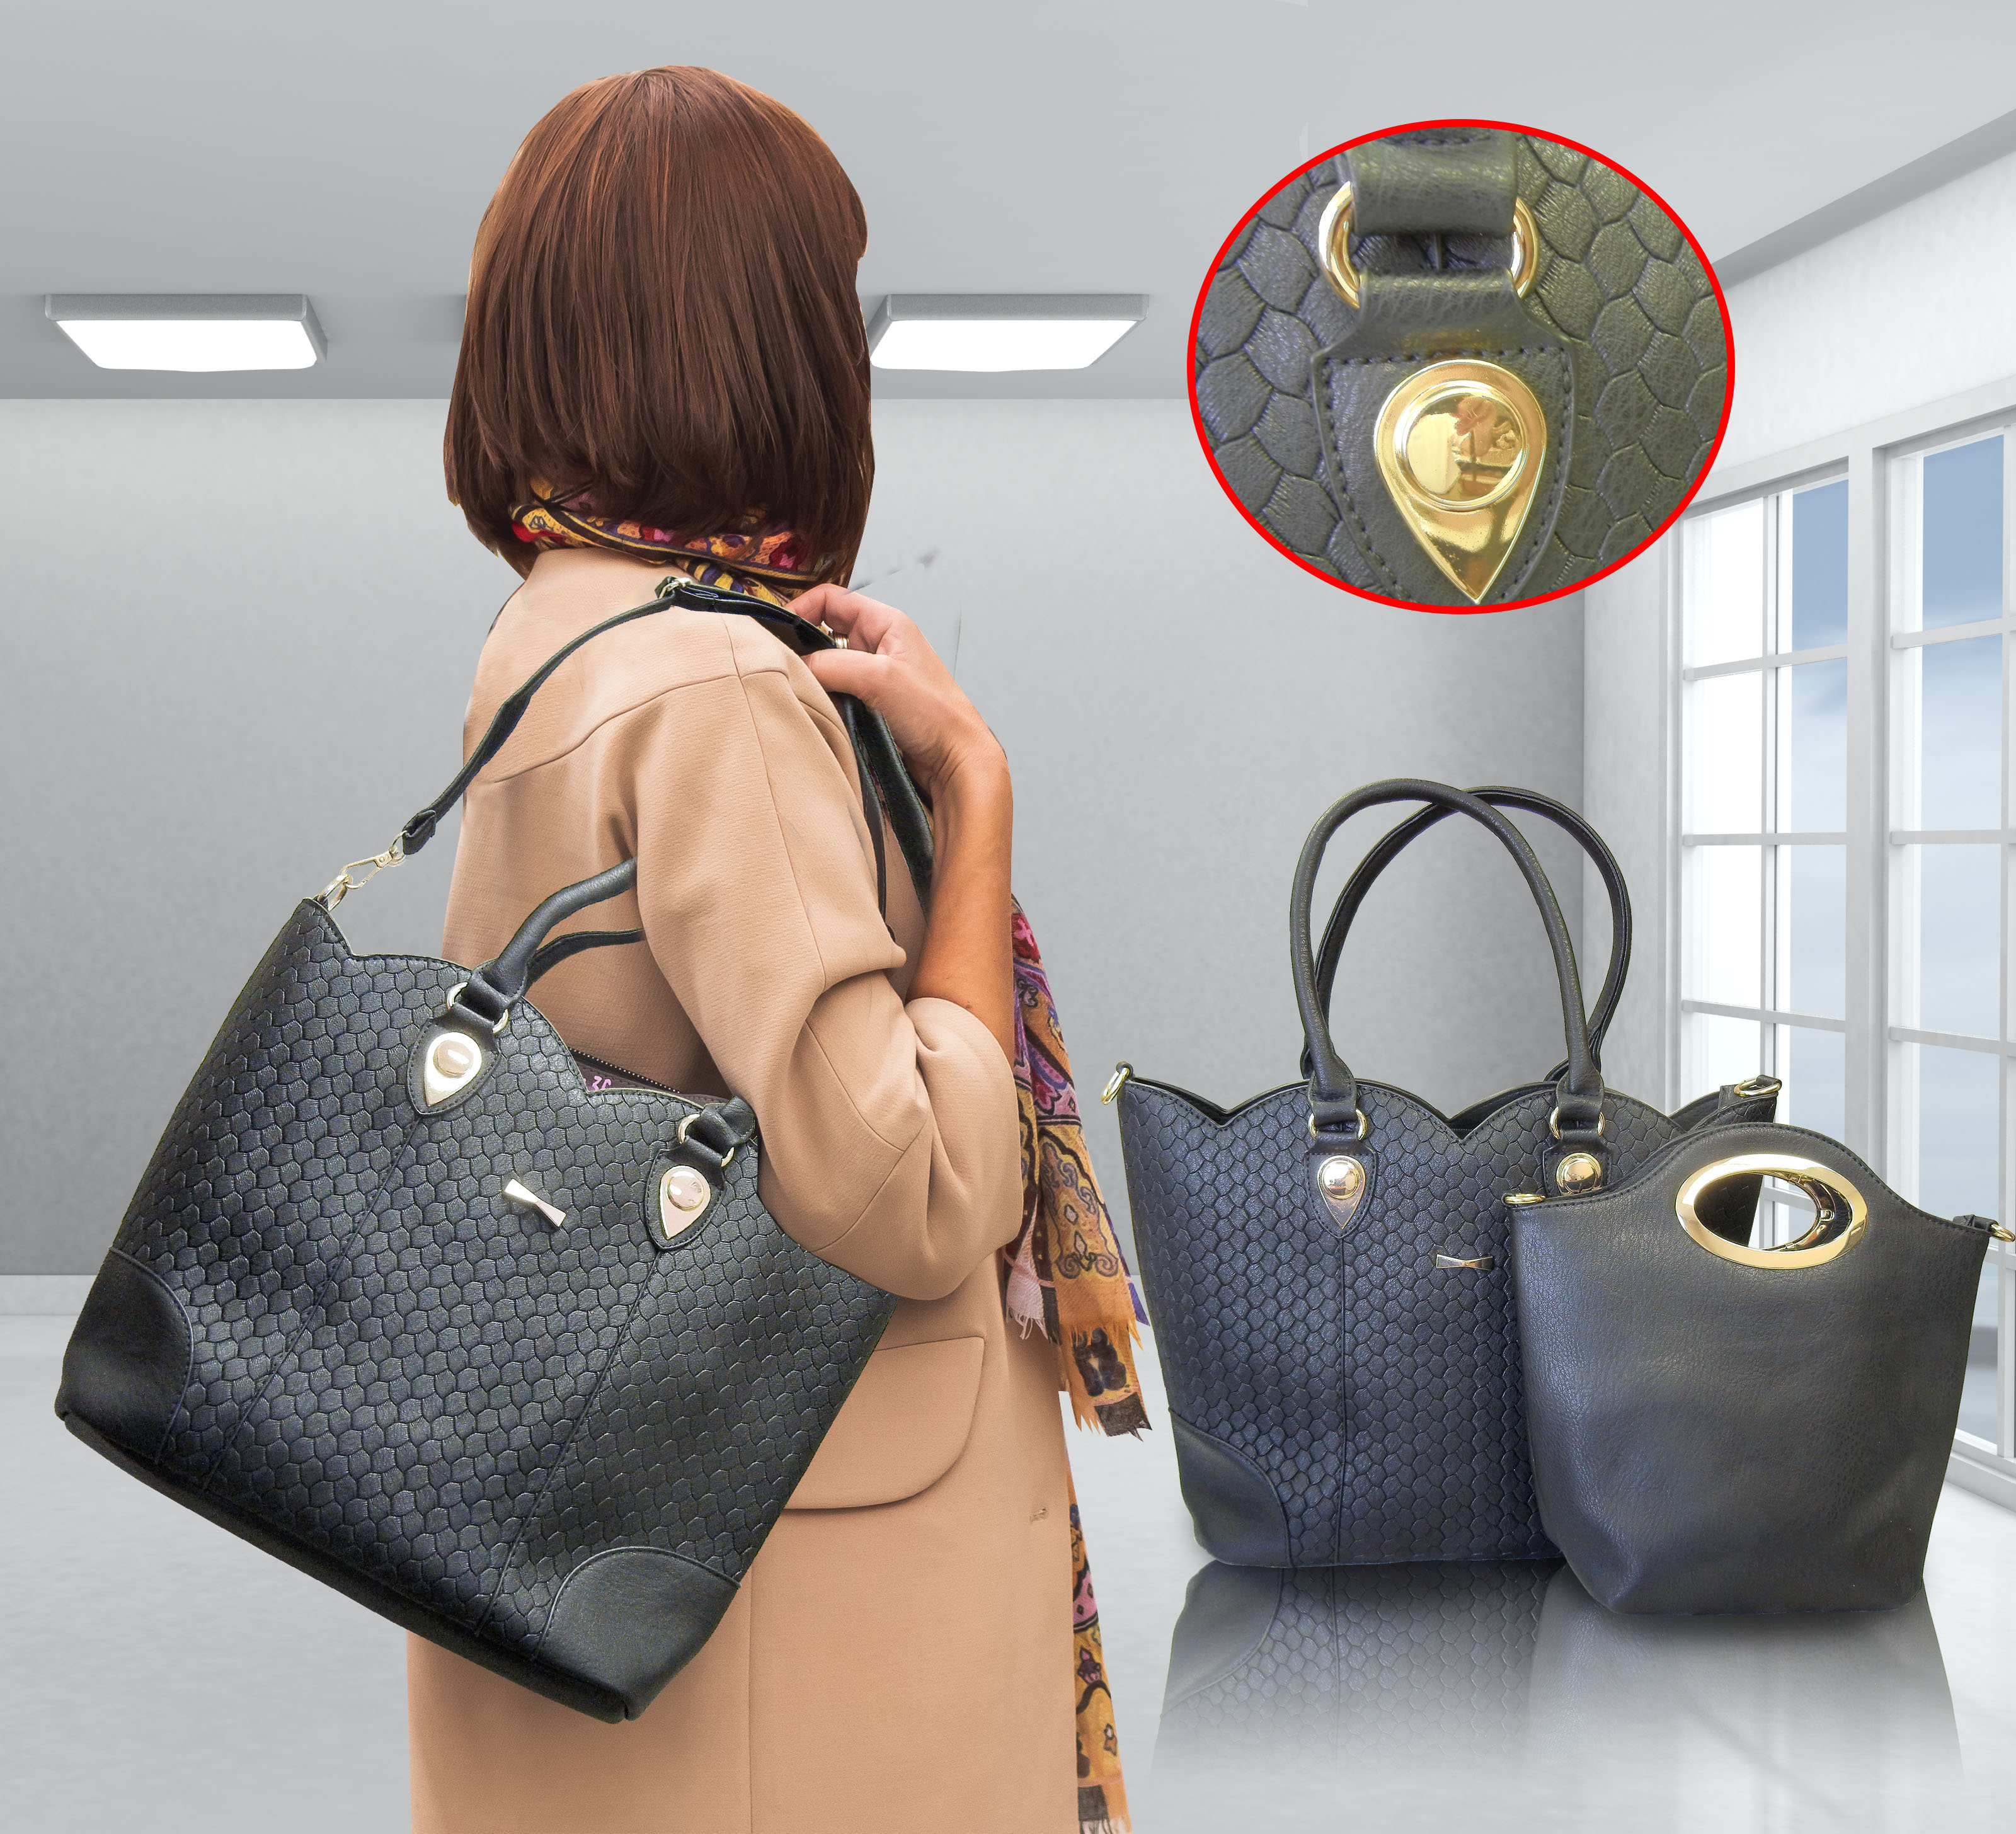 Large Ladies Handbag with removable straps, black color,